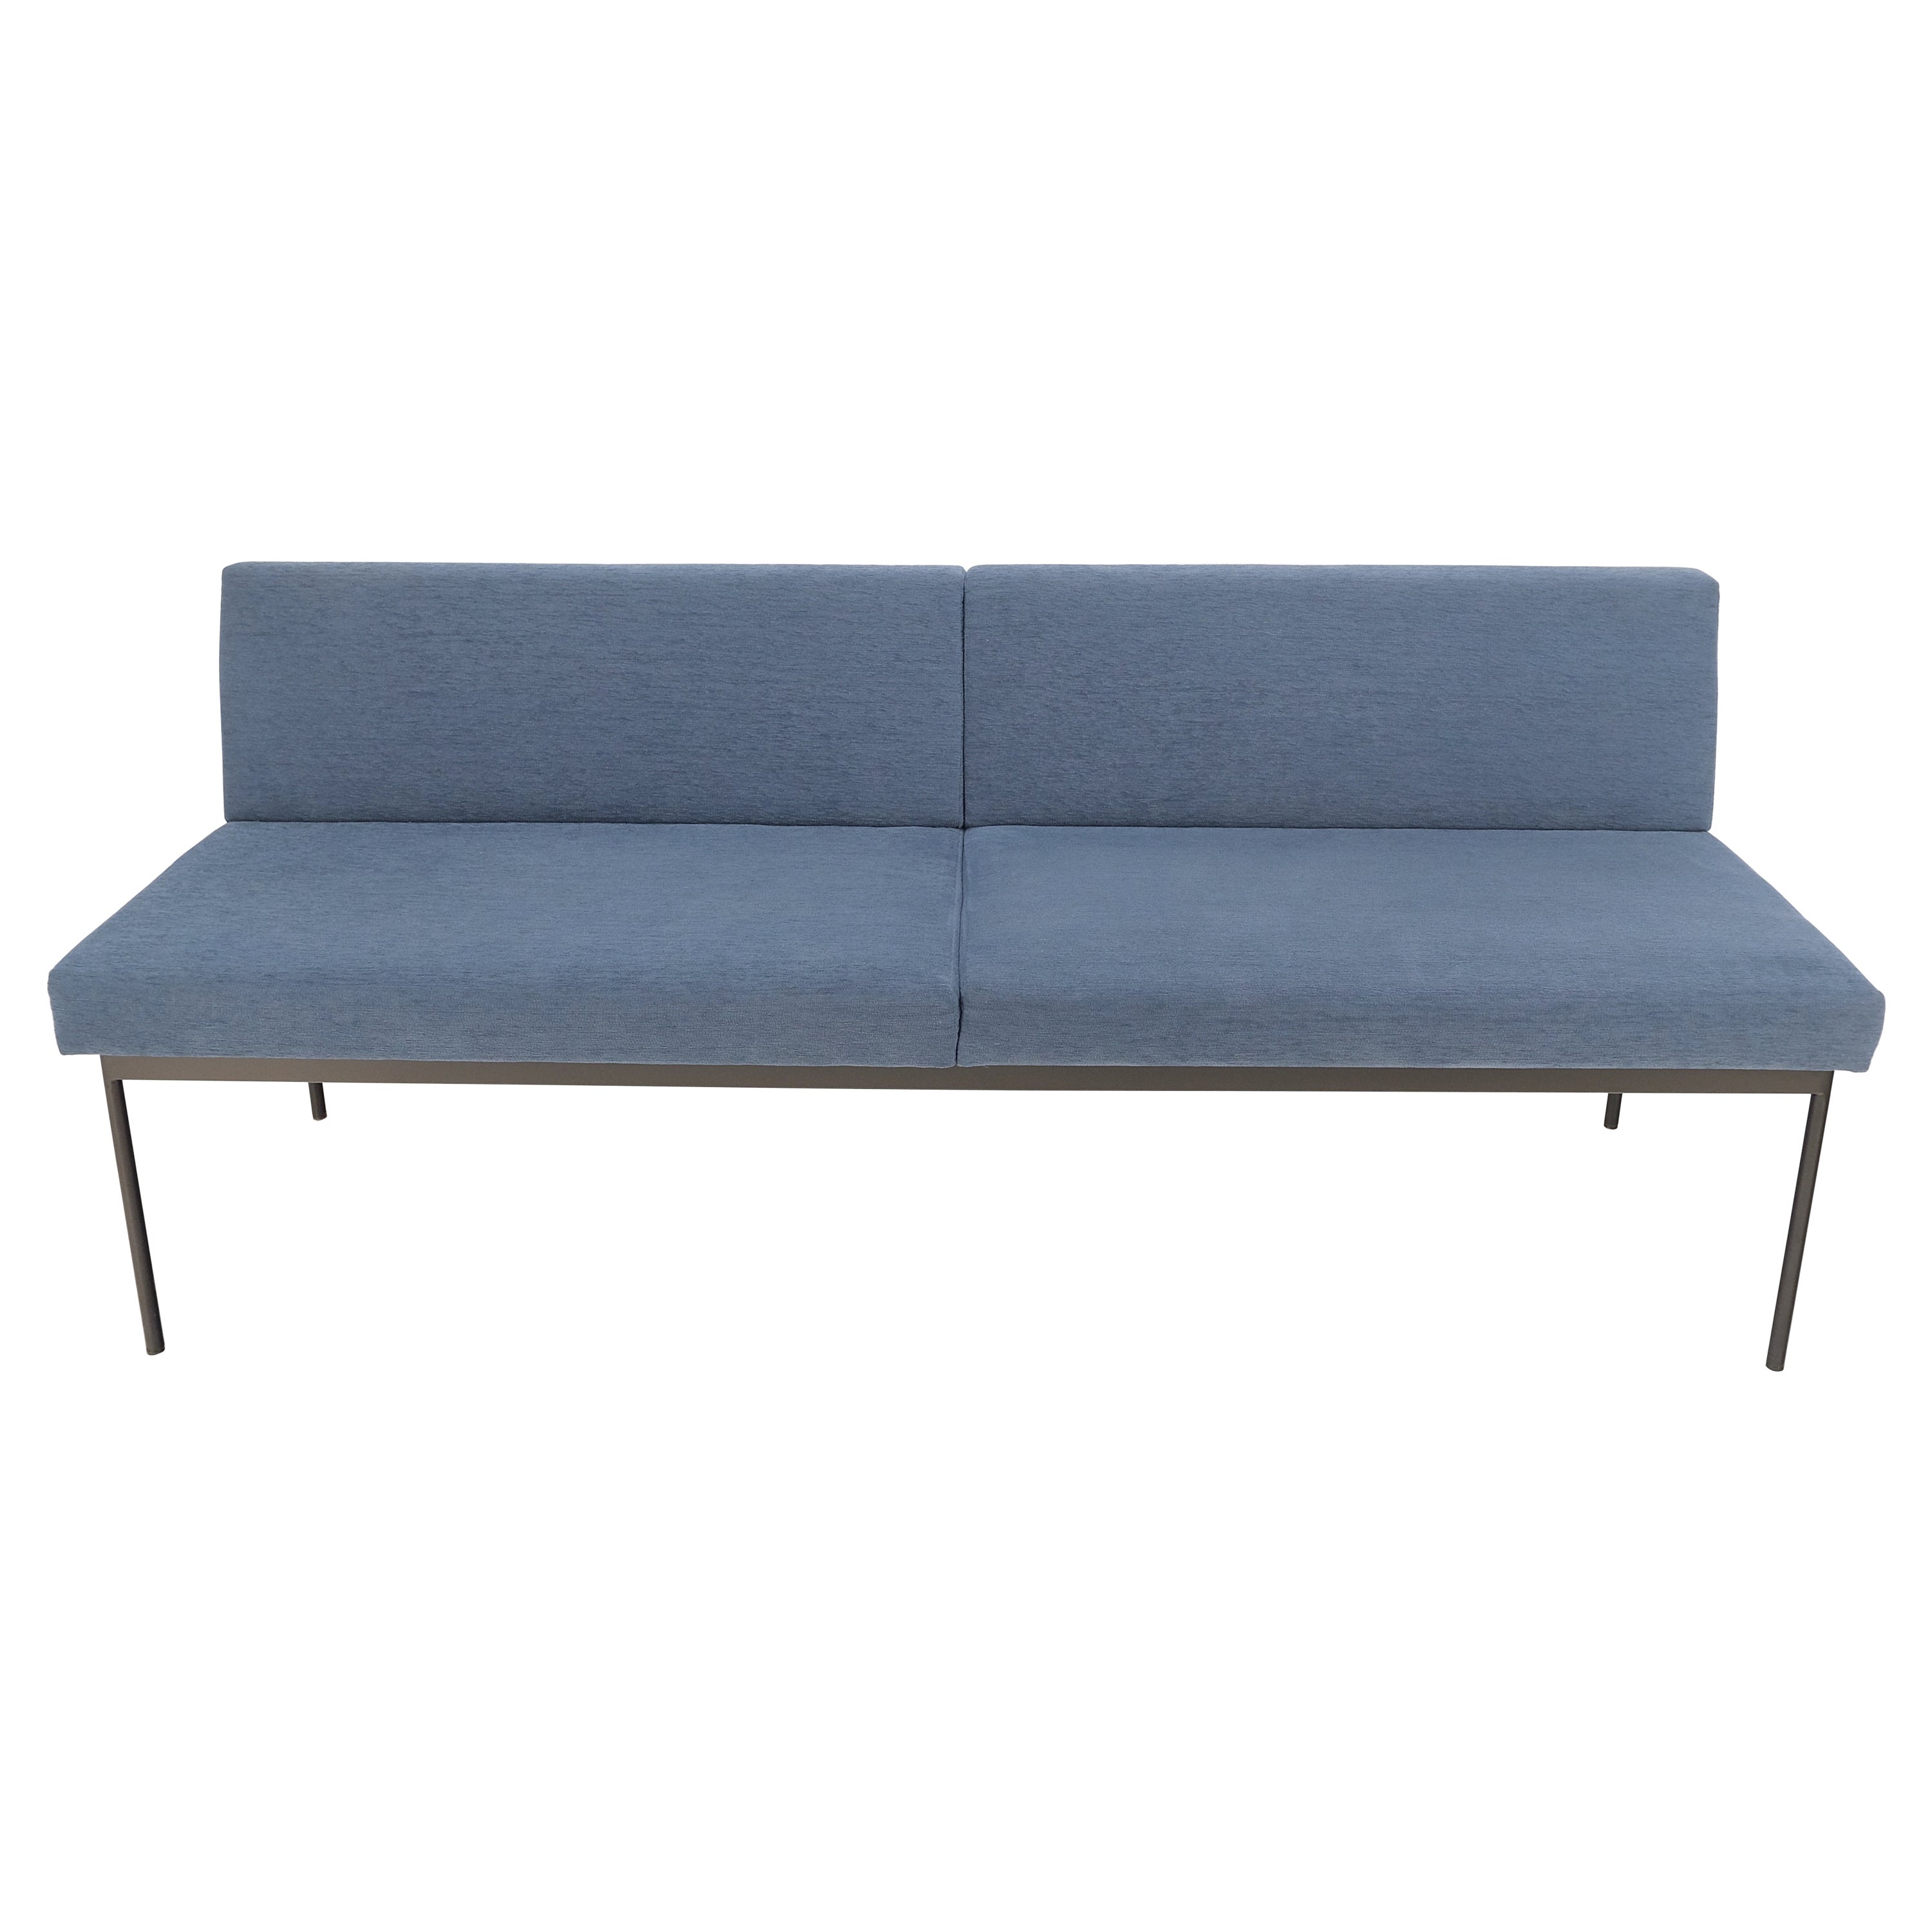 Geiger Tuxido Lounge Sofa Couch Bench Seating Bleu Rembourrage Bleu Cadre Noir MINT !